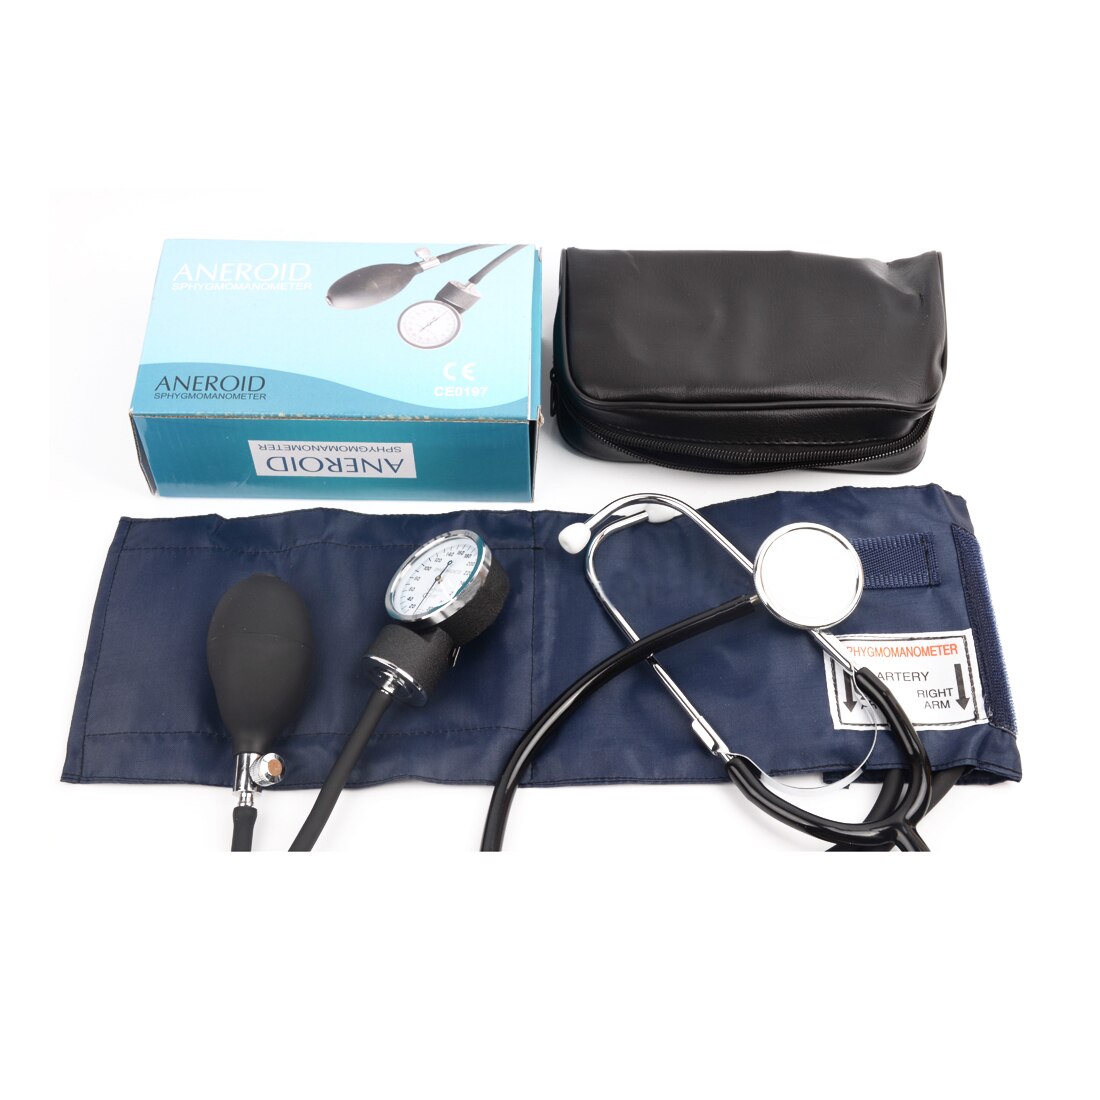 Blodtryksmåler meter tonometer manchet stetoskop kit rejse aneroid blodtryksmåler